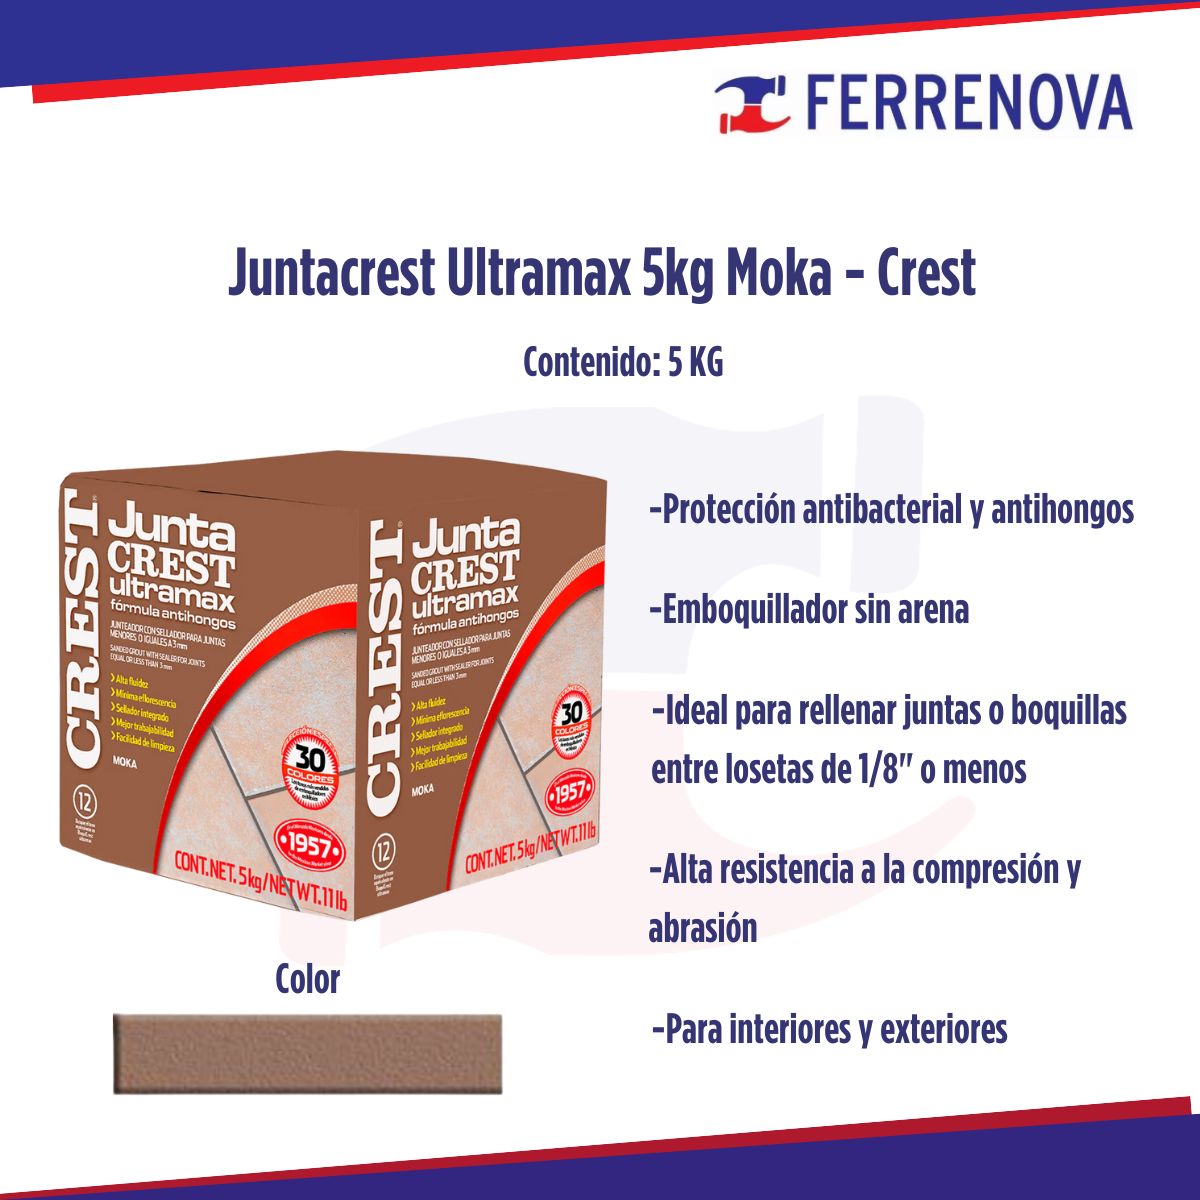 Juntacrest Ultramax 5kg Moka - Crest